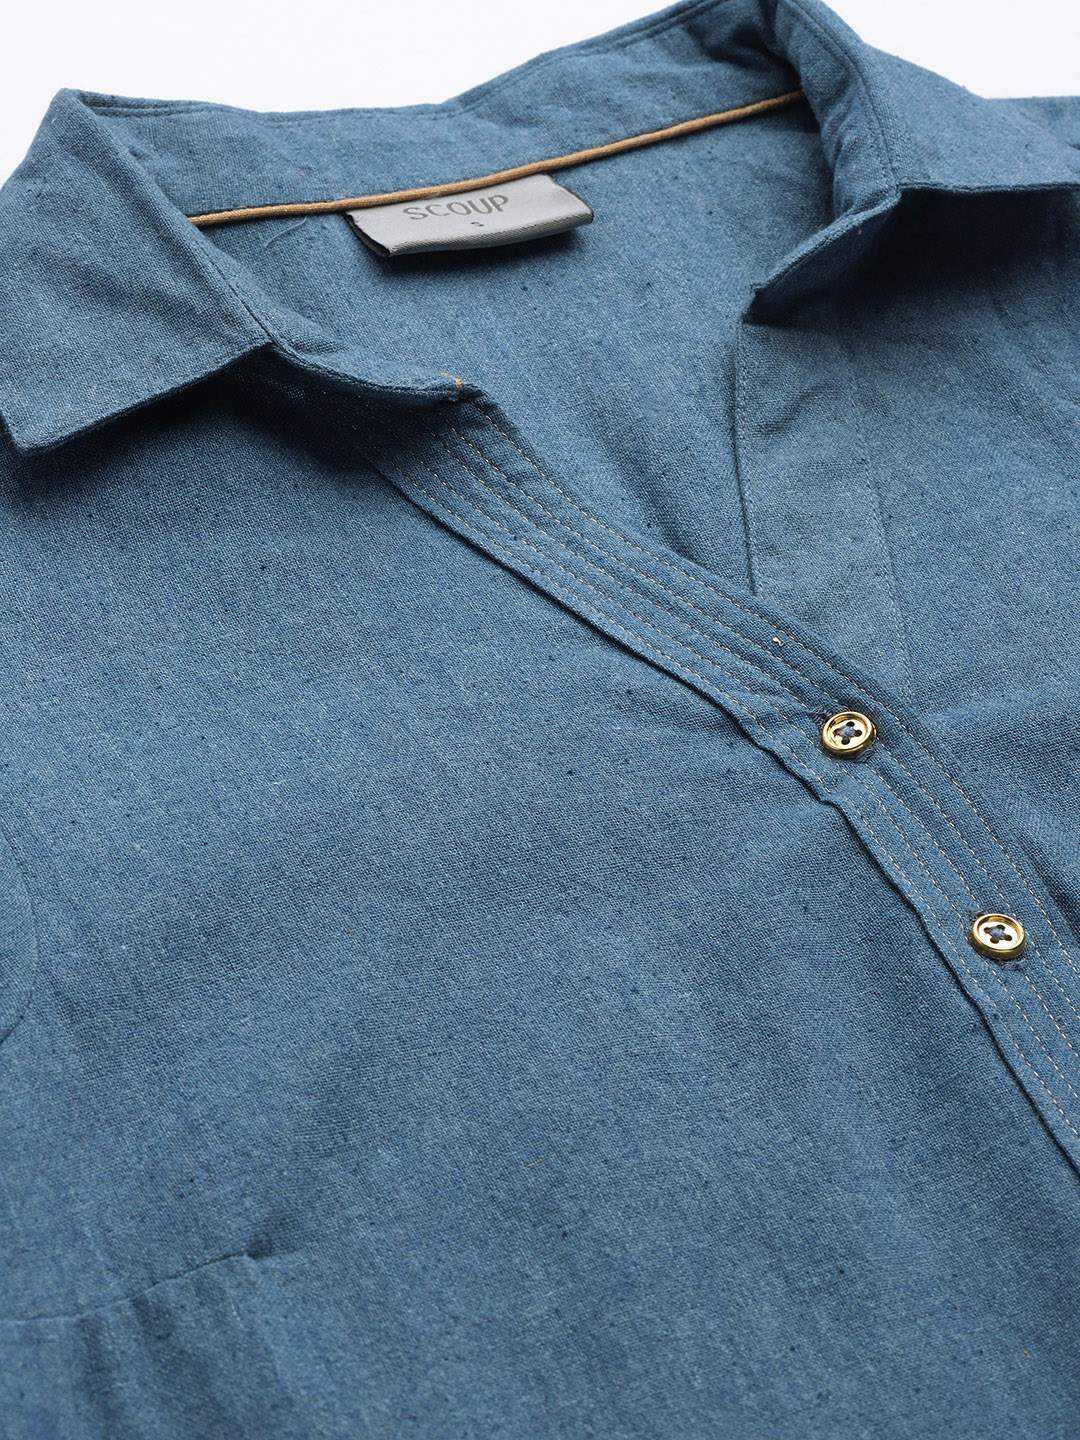 Blue cotton shirt